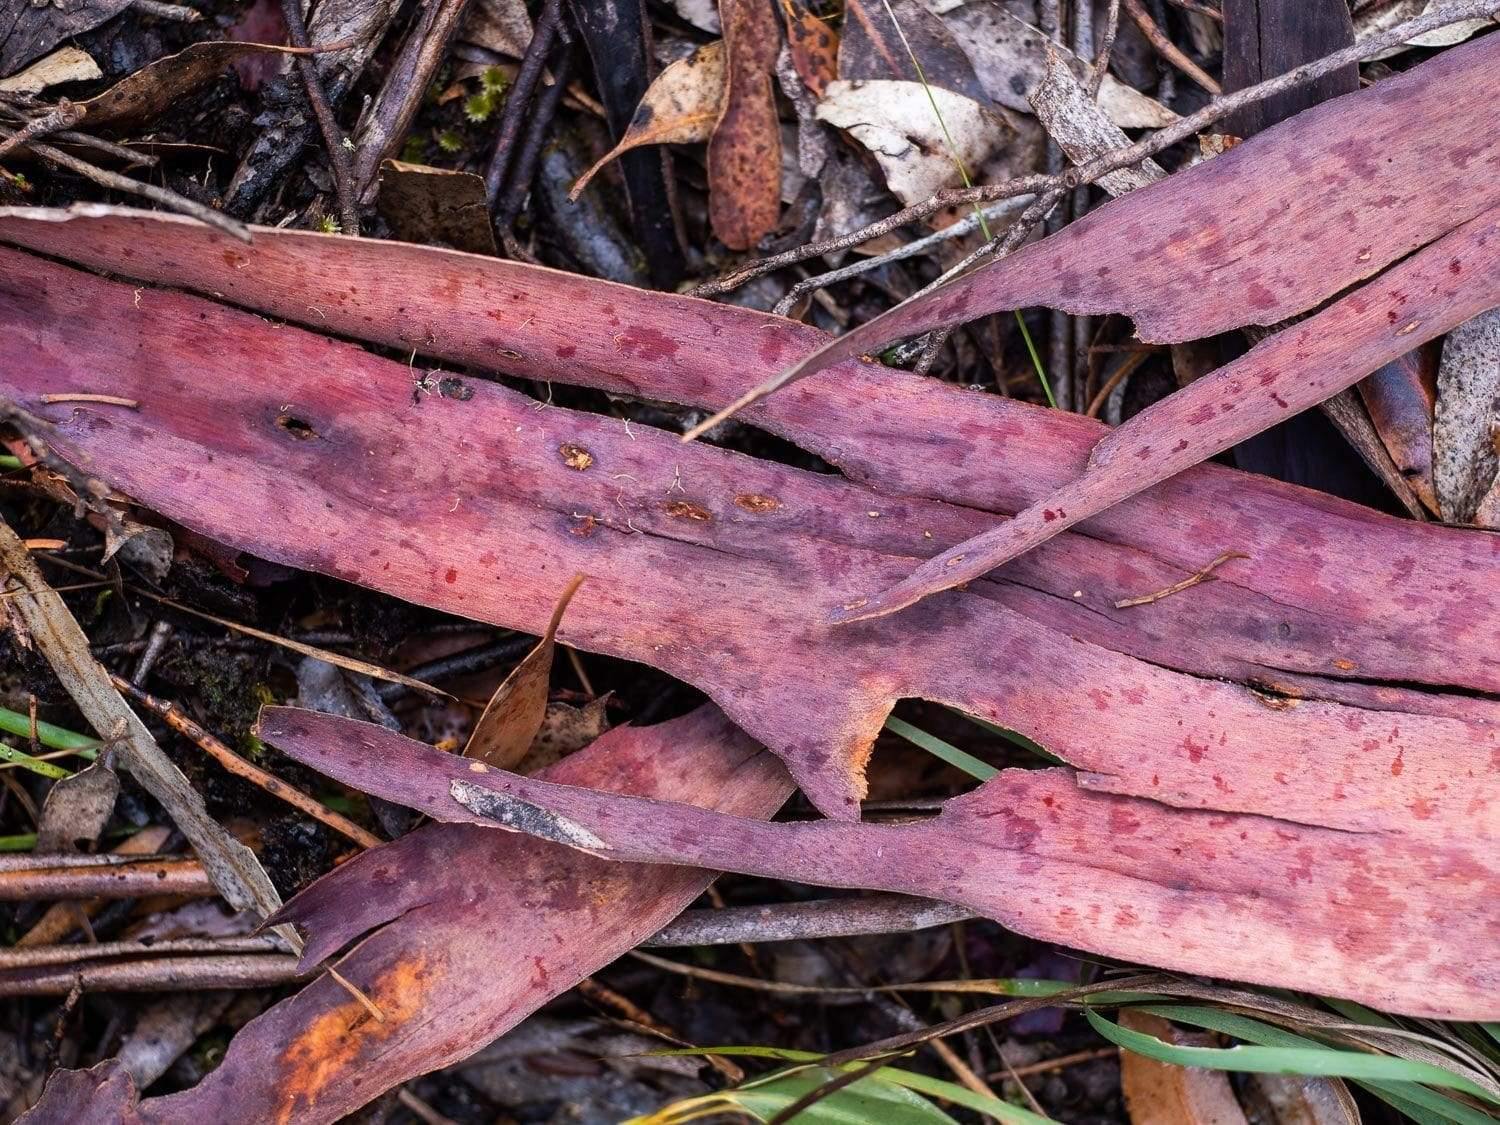 Long purplish tree tree stems skins on the ground, Leaf Litter #5 - Kangaroo Island SA